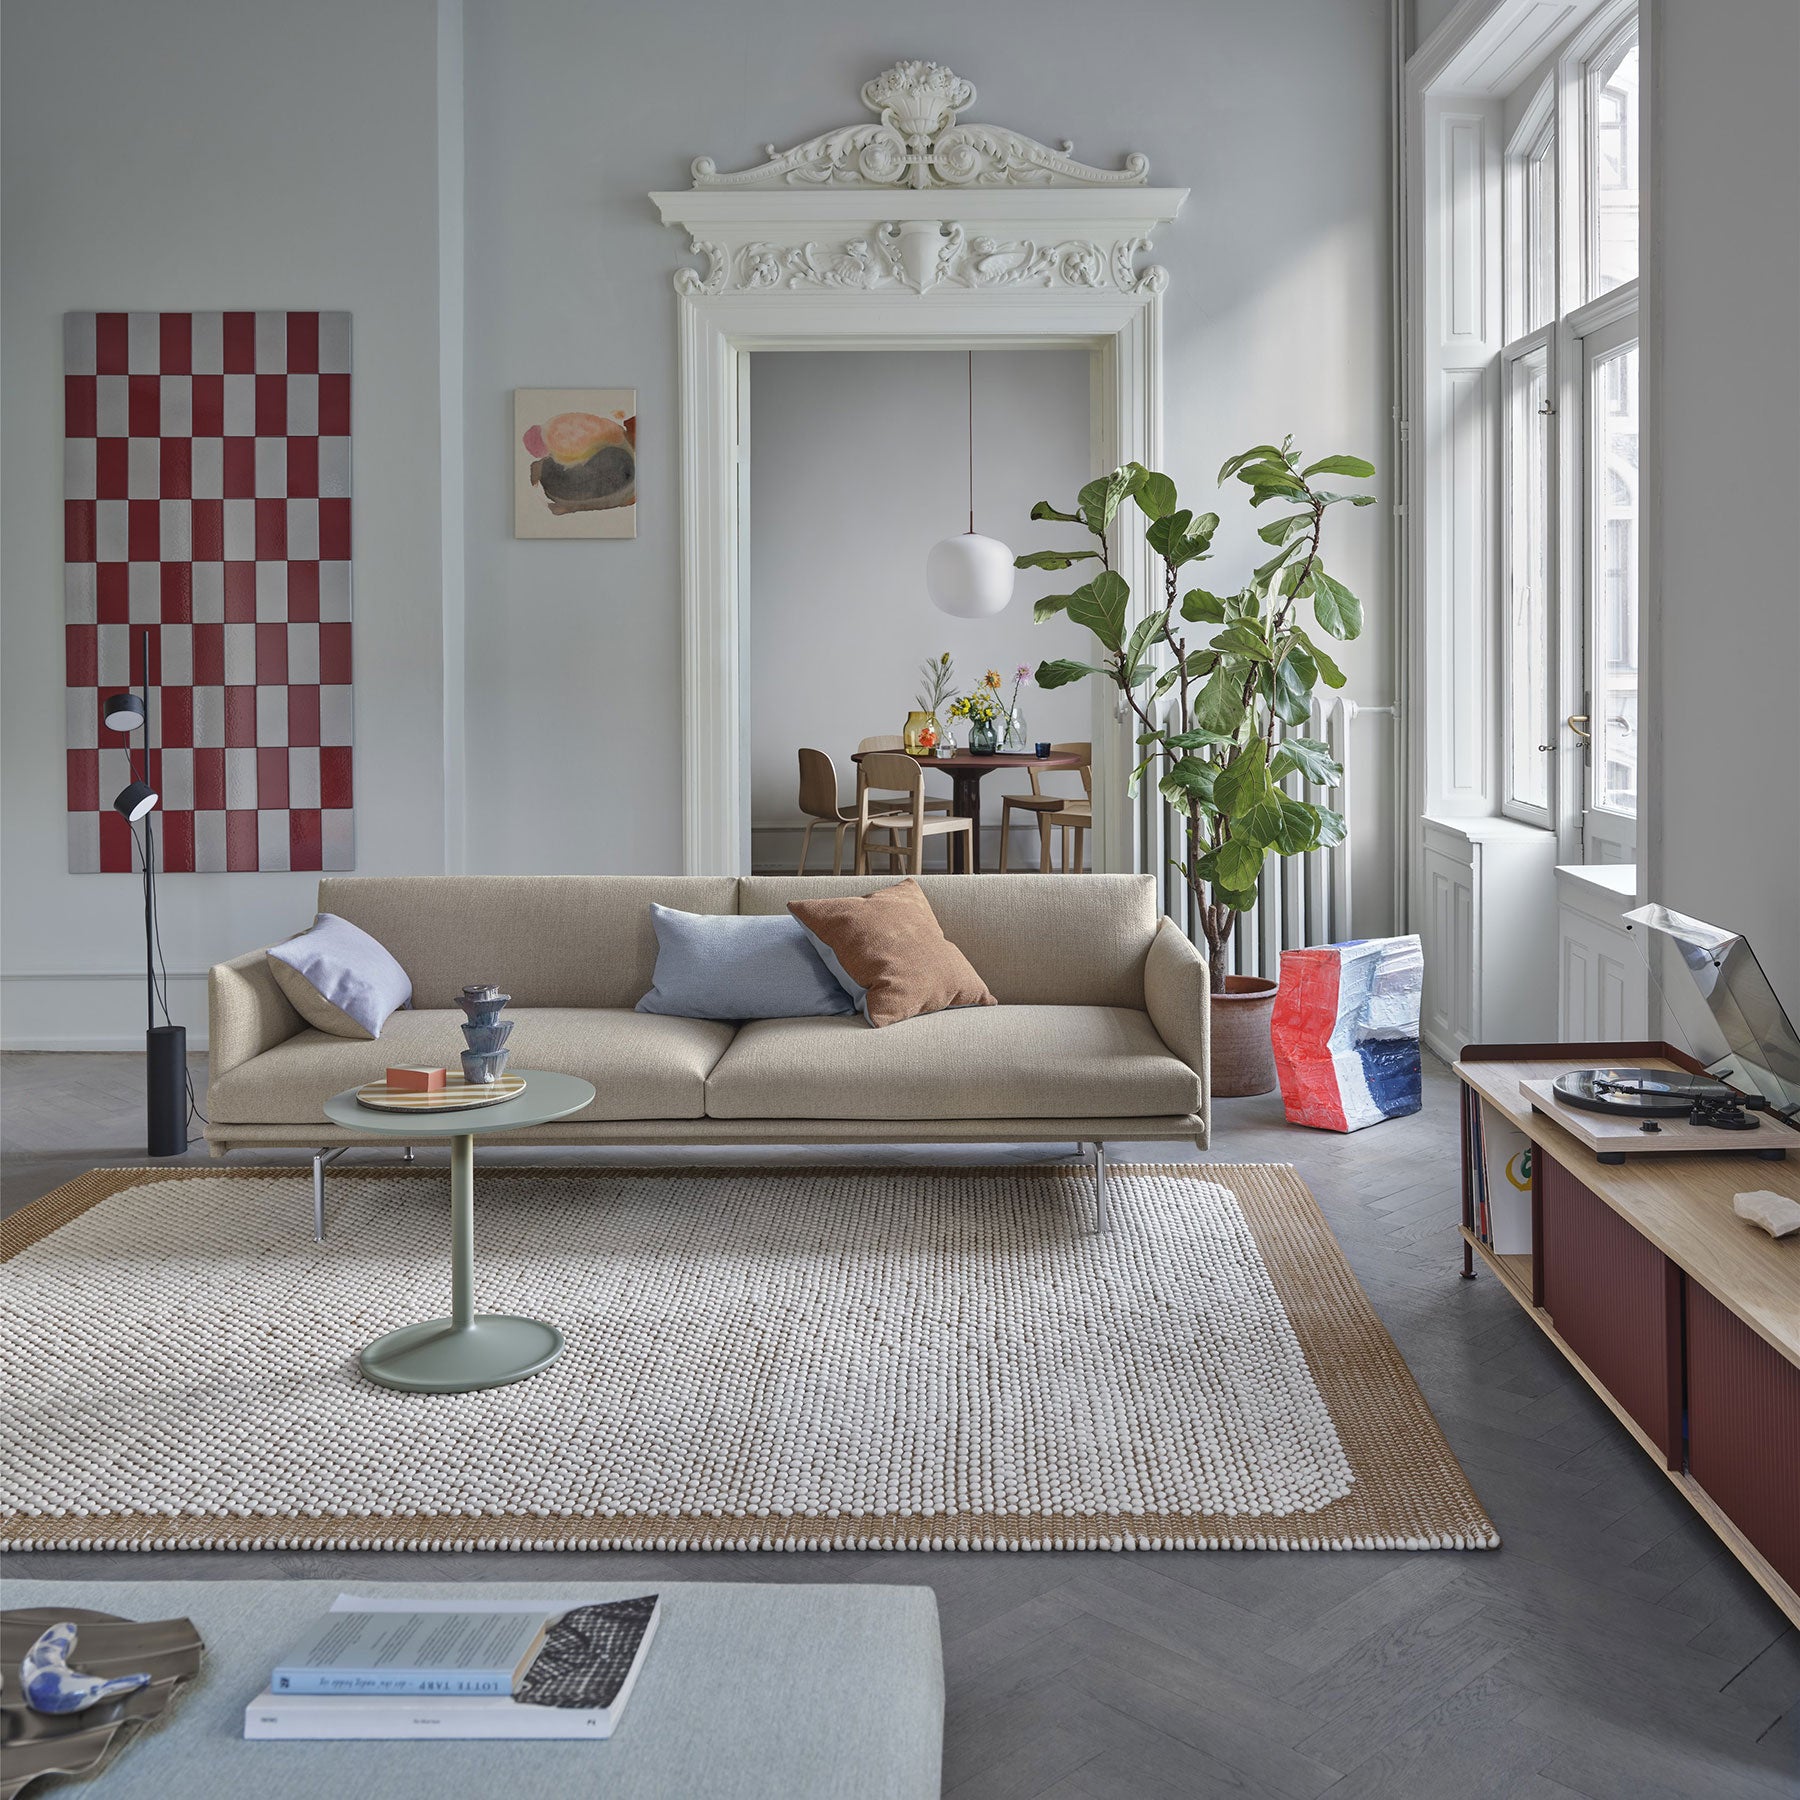 collection | muuto outline sofa series